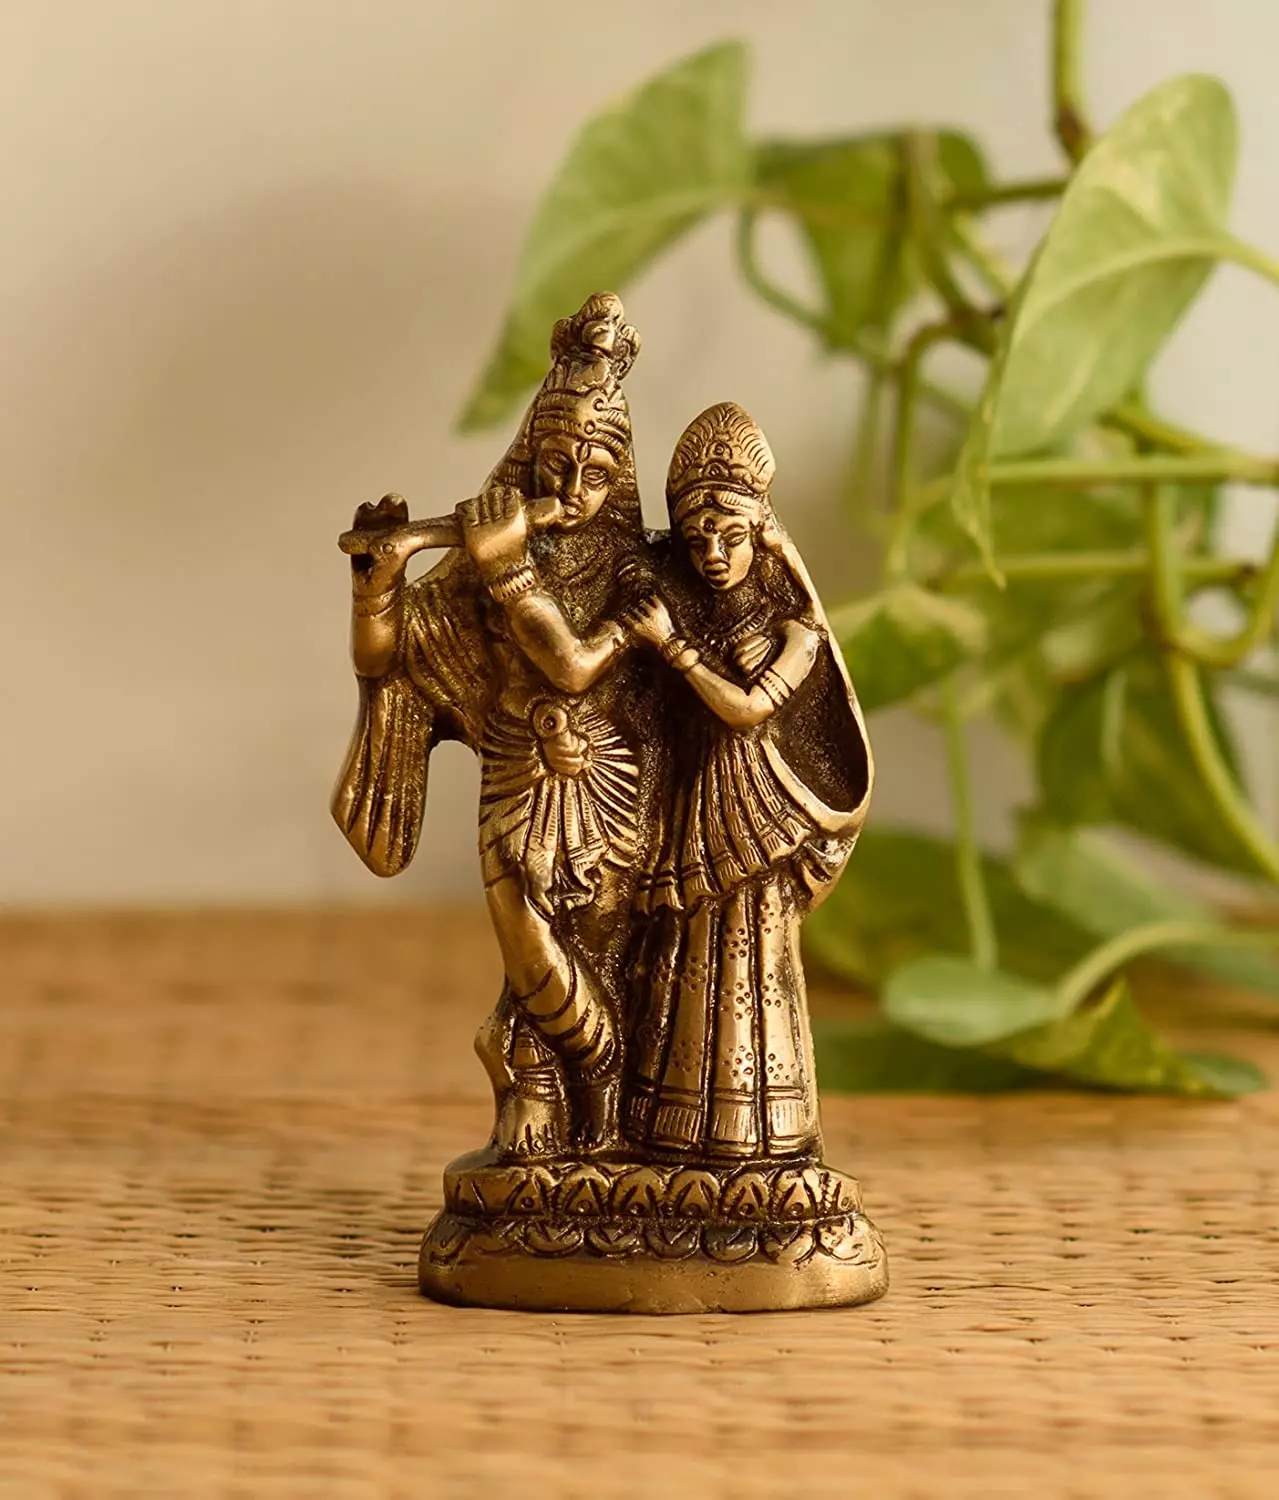 Brass Radha Krishna Pair Decorative Showpiece For Home Decor And Gift